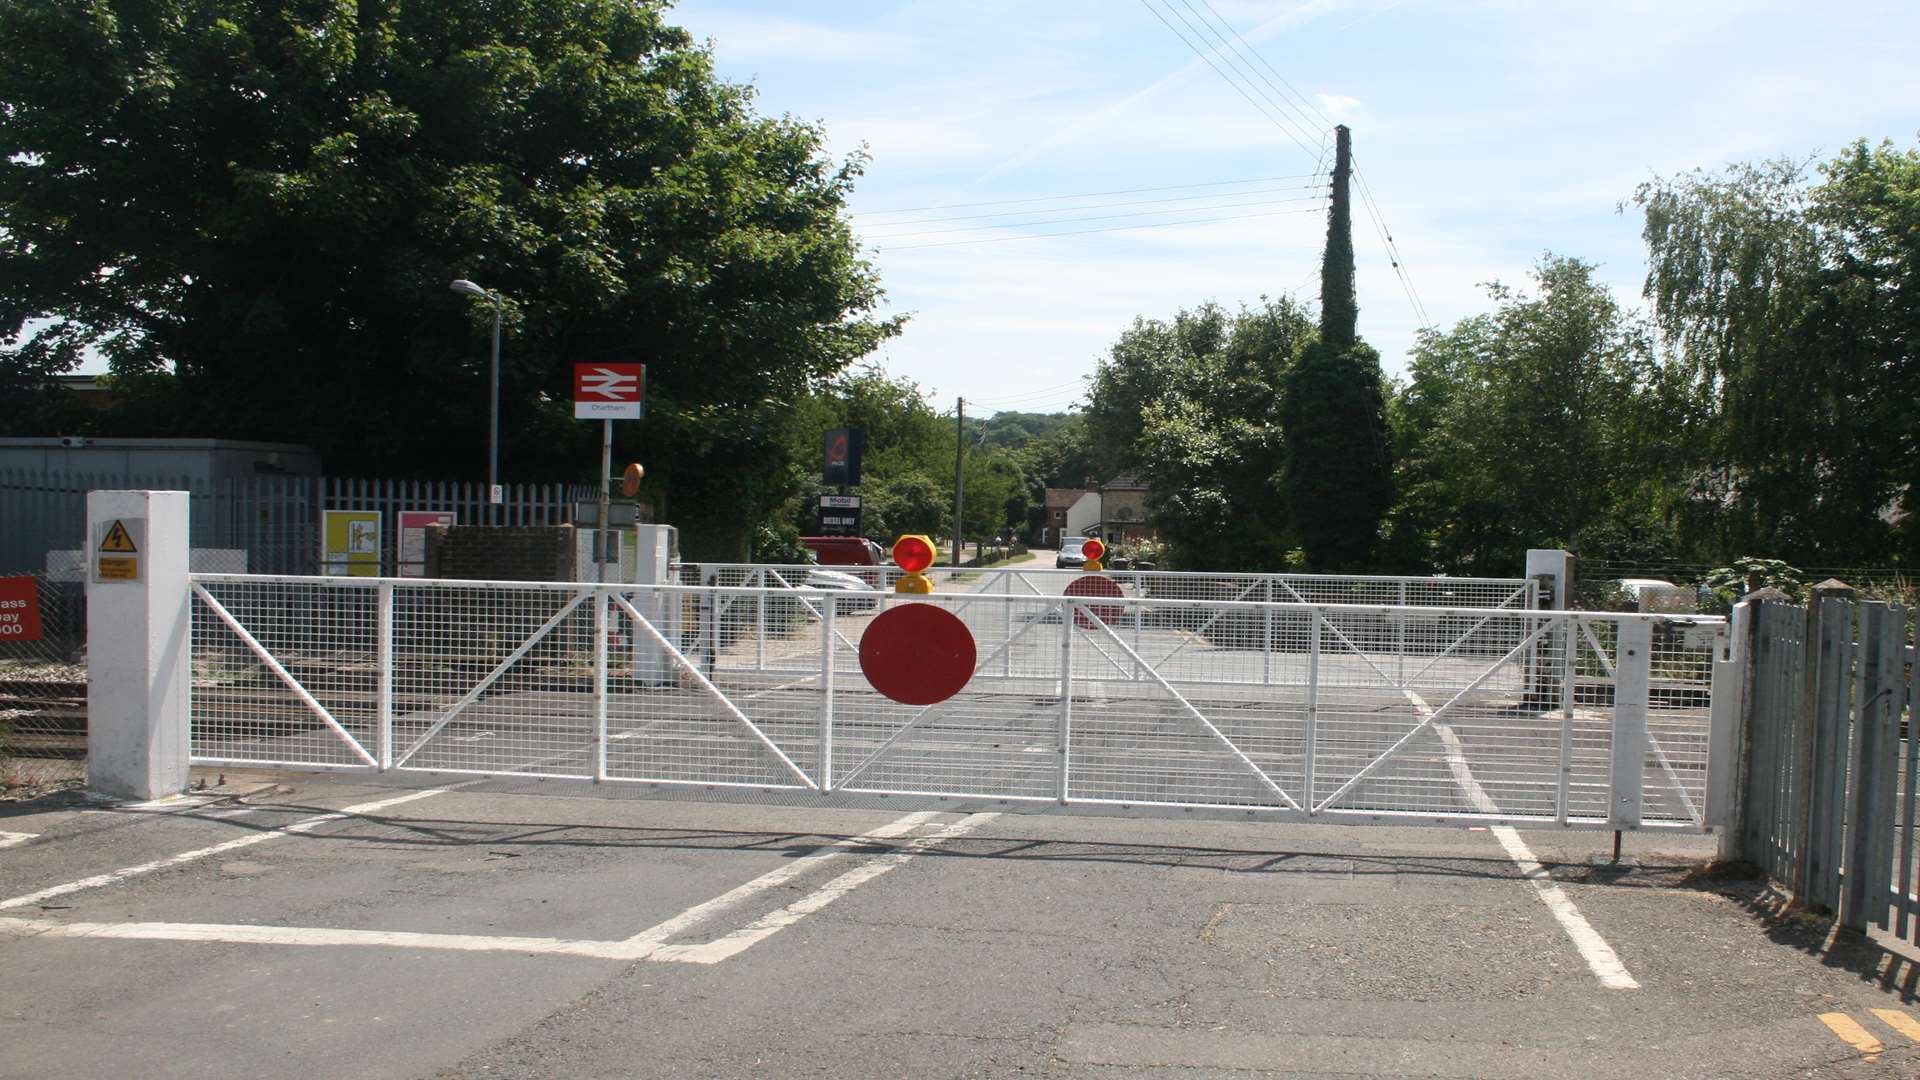 The new gates at Chartham.